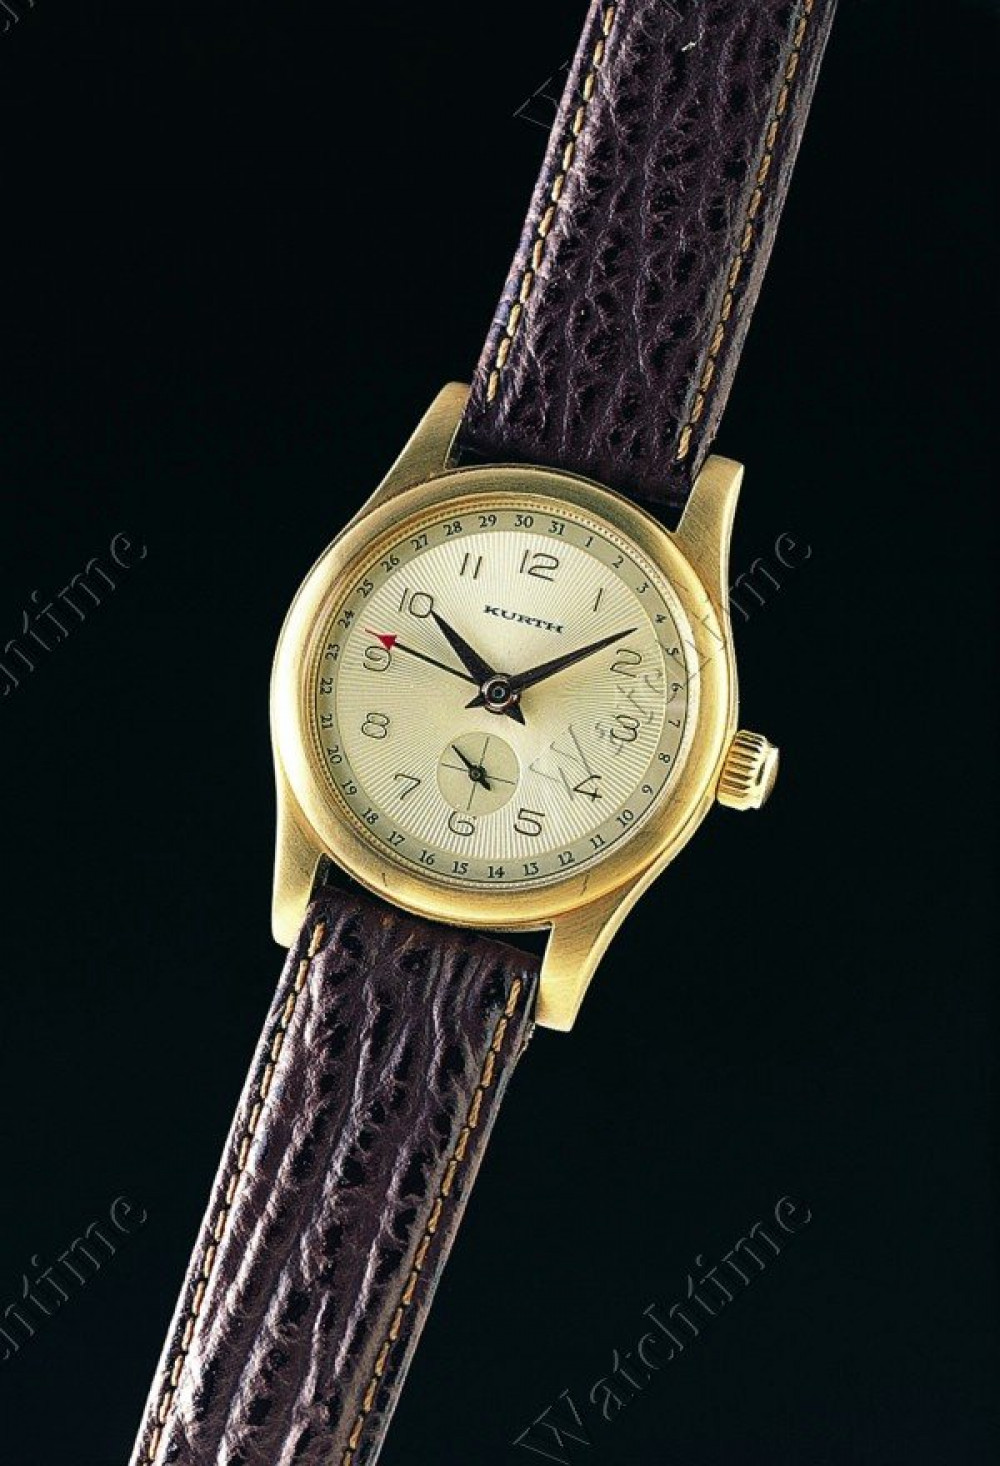 Zegarek firmy Kurth, model Datumsuhr